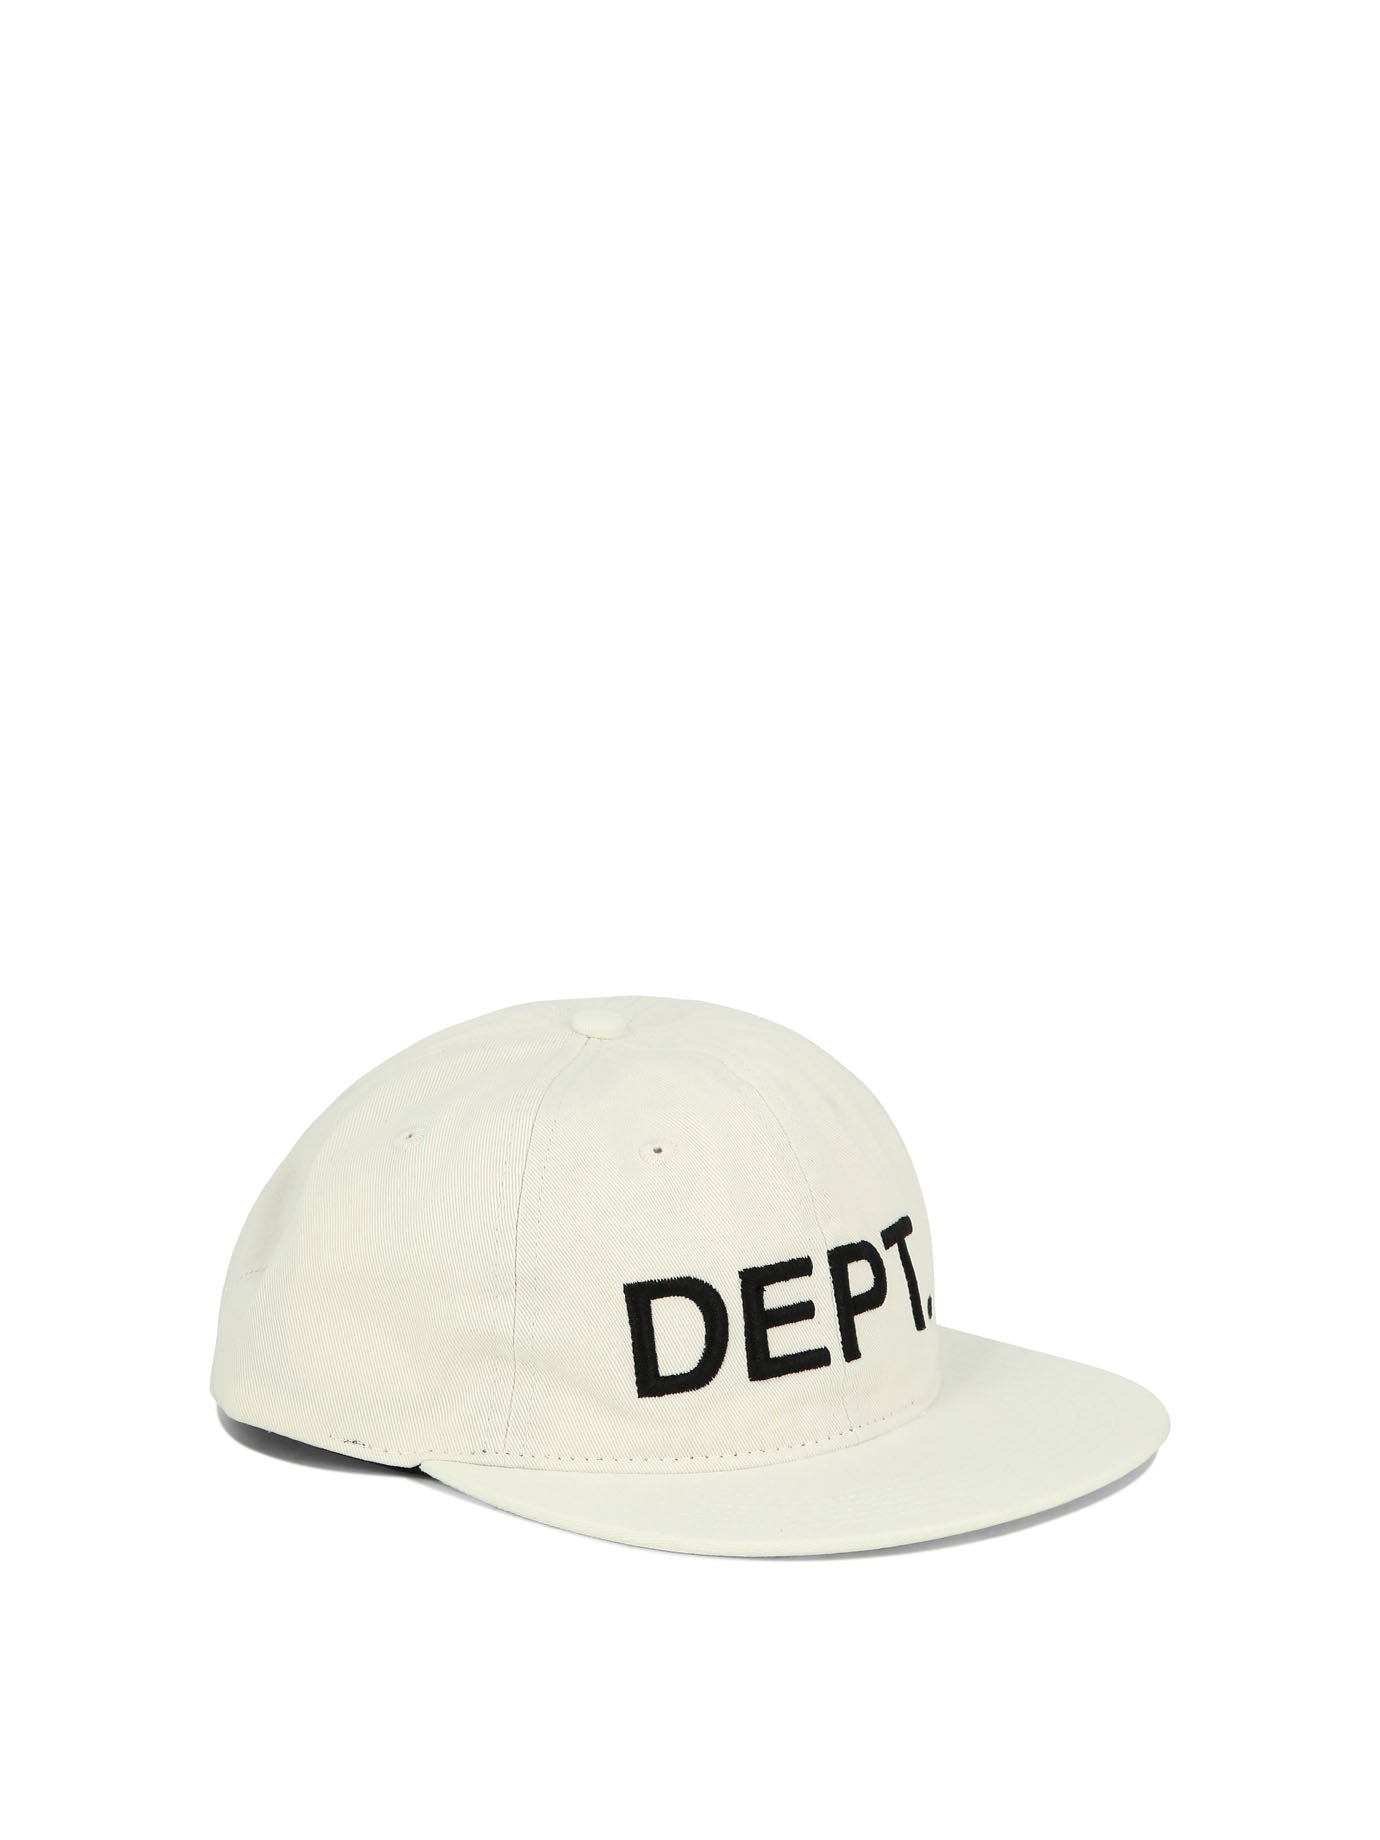 DEPT Hat